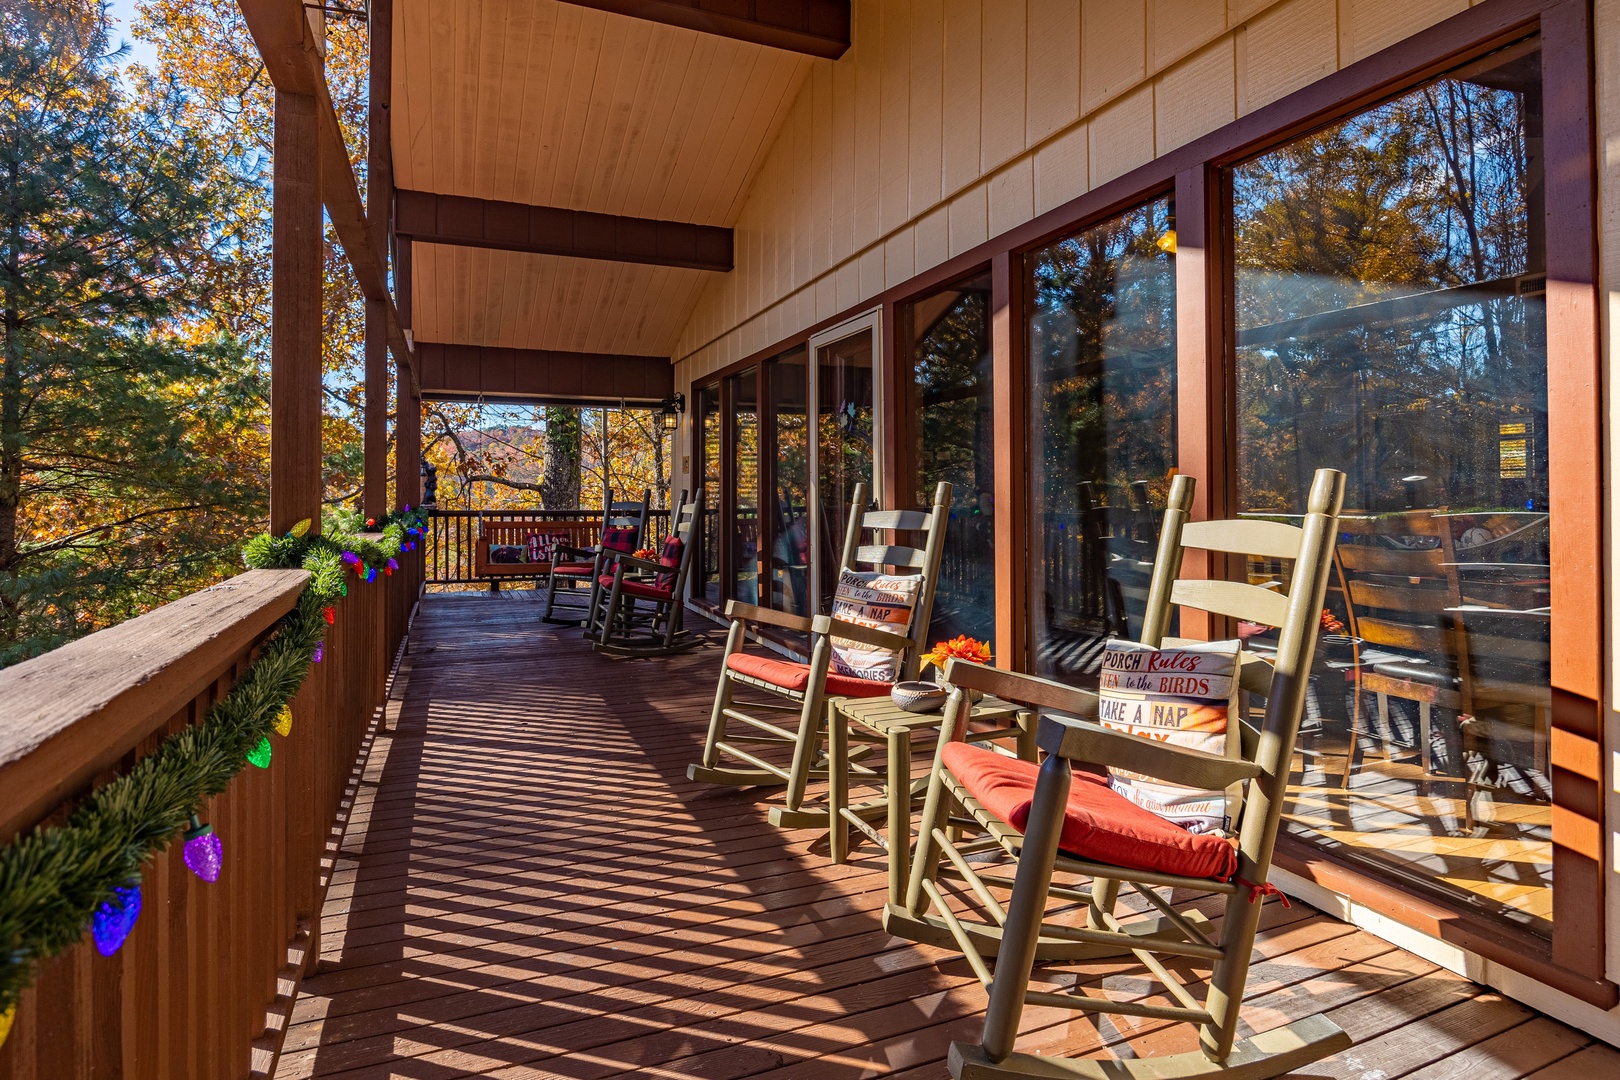 Deck Seating for 4 at Buena Vista Getaway, a 3 bedroom cabin rental located in gatlinburg